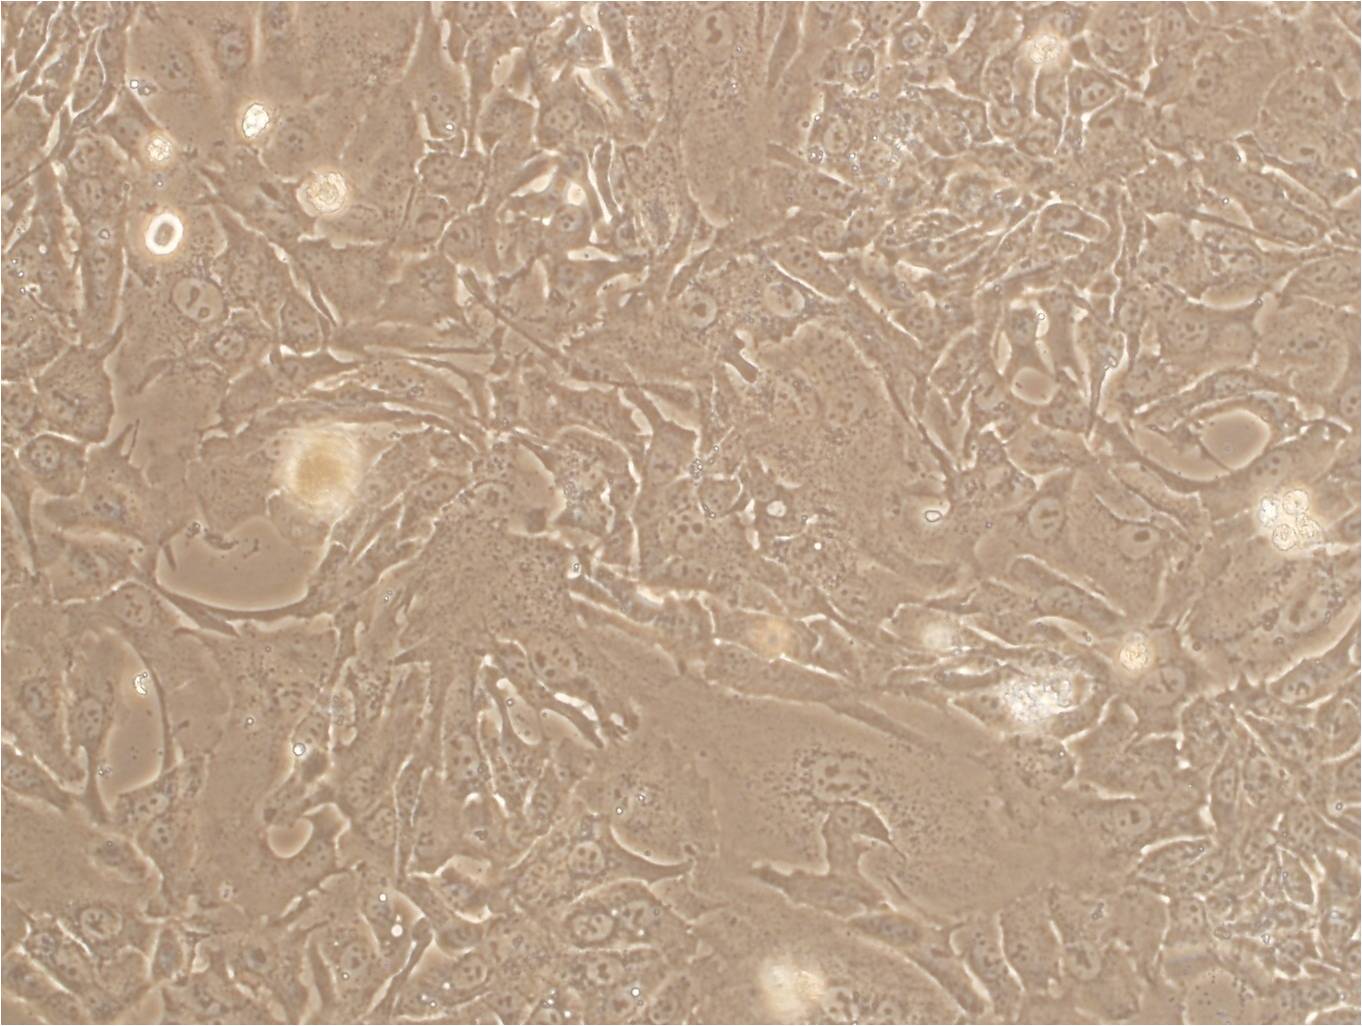 NCI-H1355 cell line人非小细胞肺癌细胞系